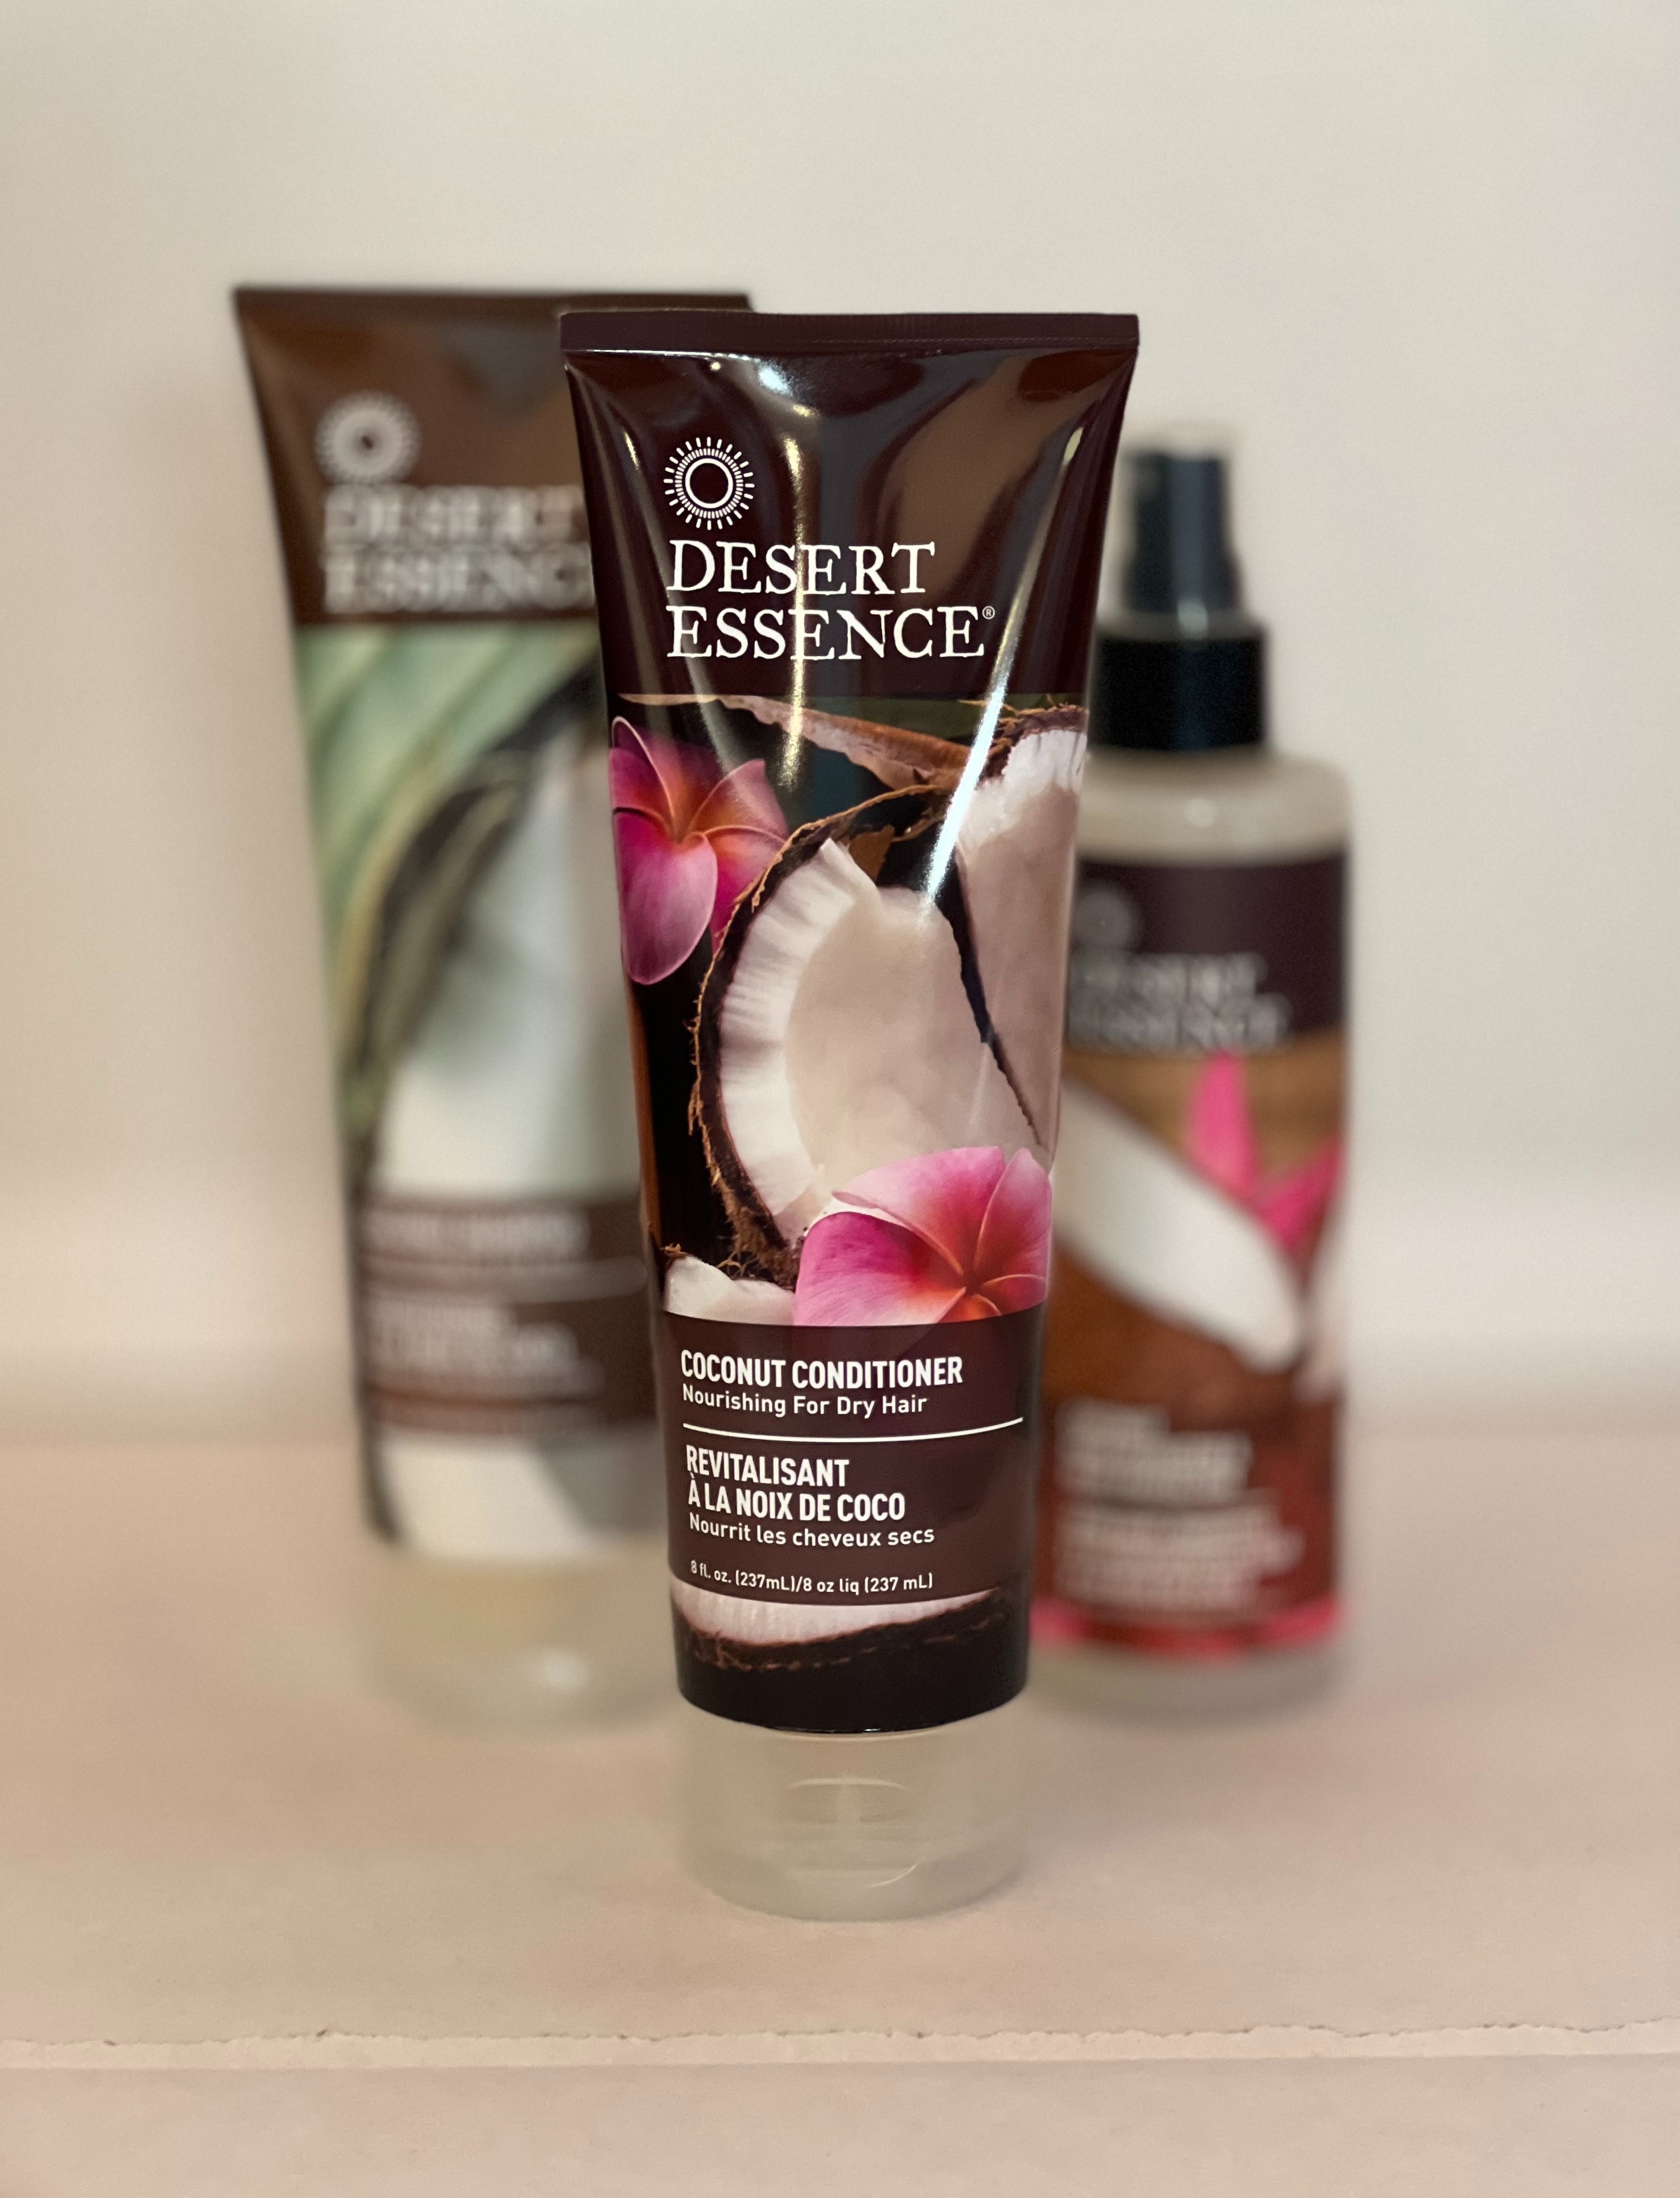 Après-shampoing Desert Essence gamme coco